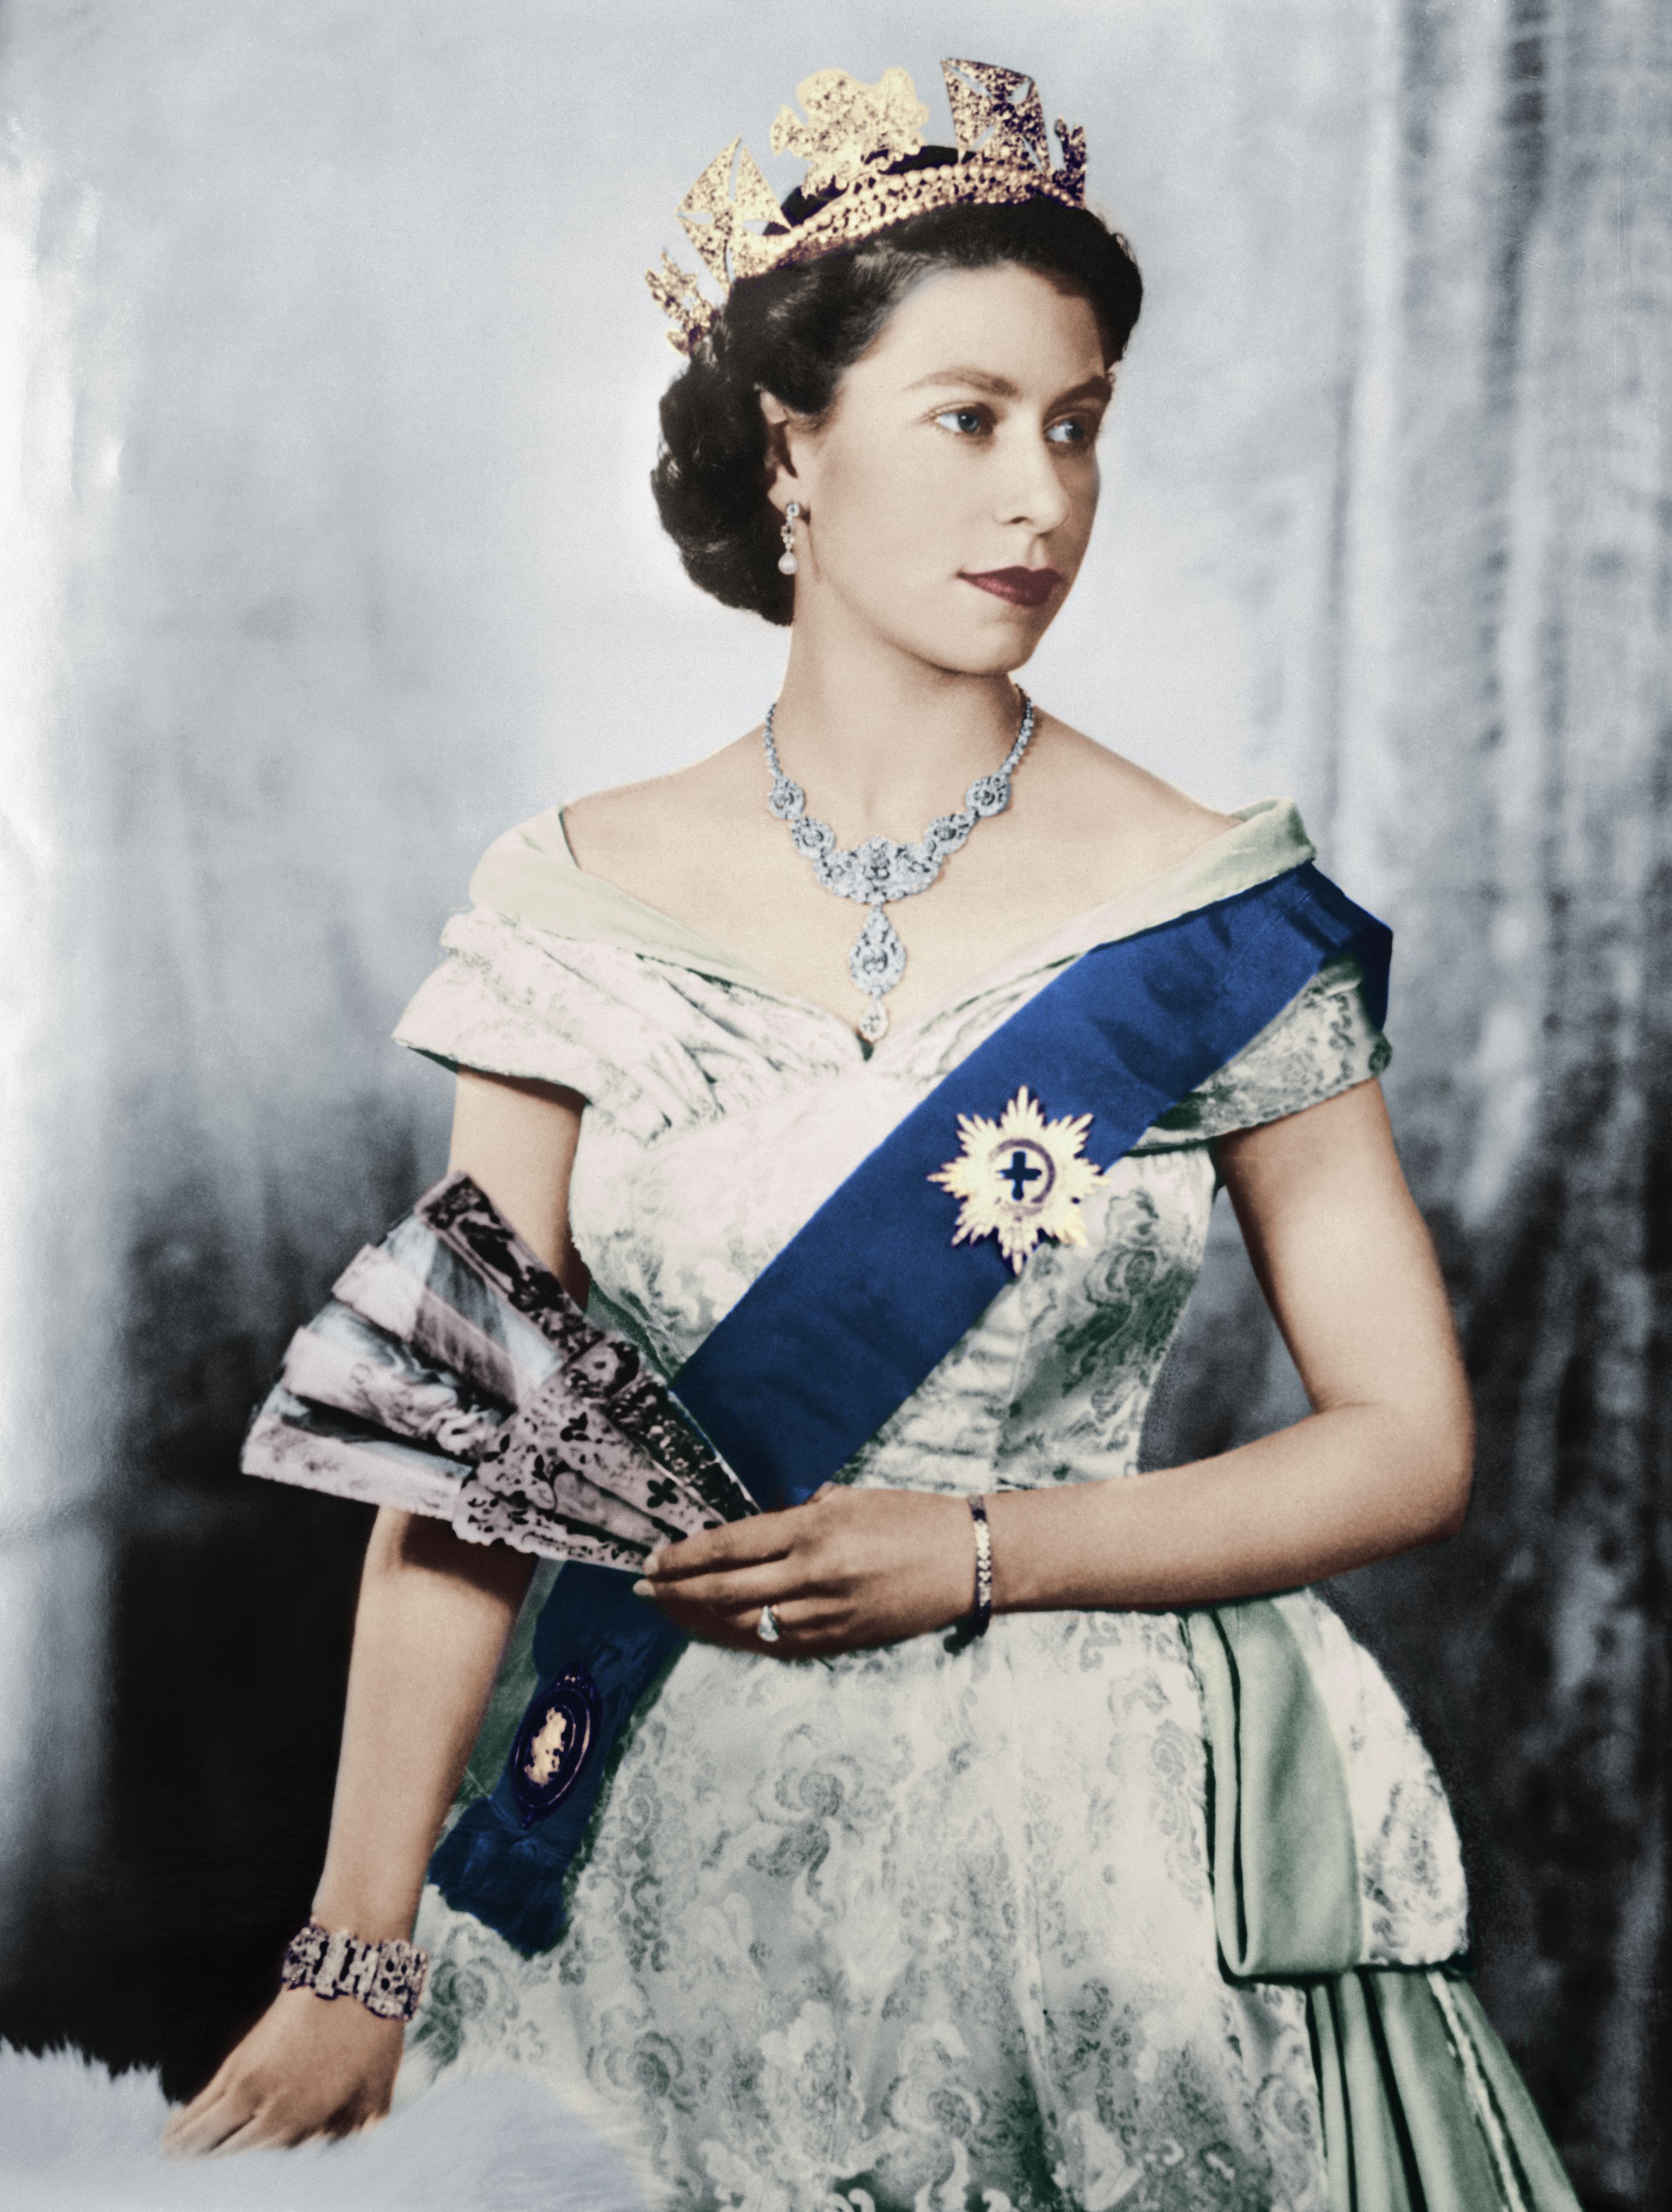 25 Best Queen Elizabeth Quotes to Remember Her Reign